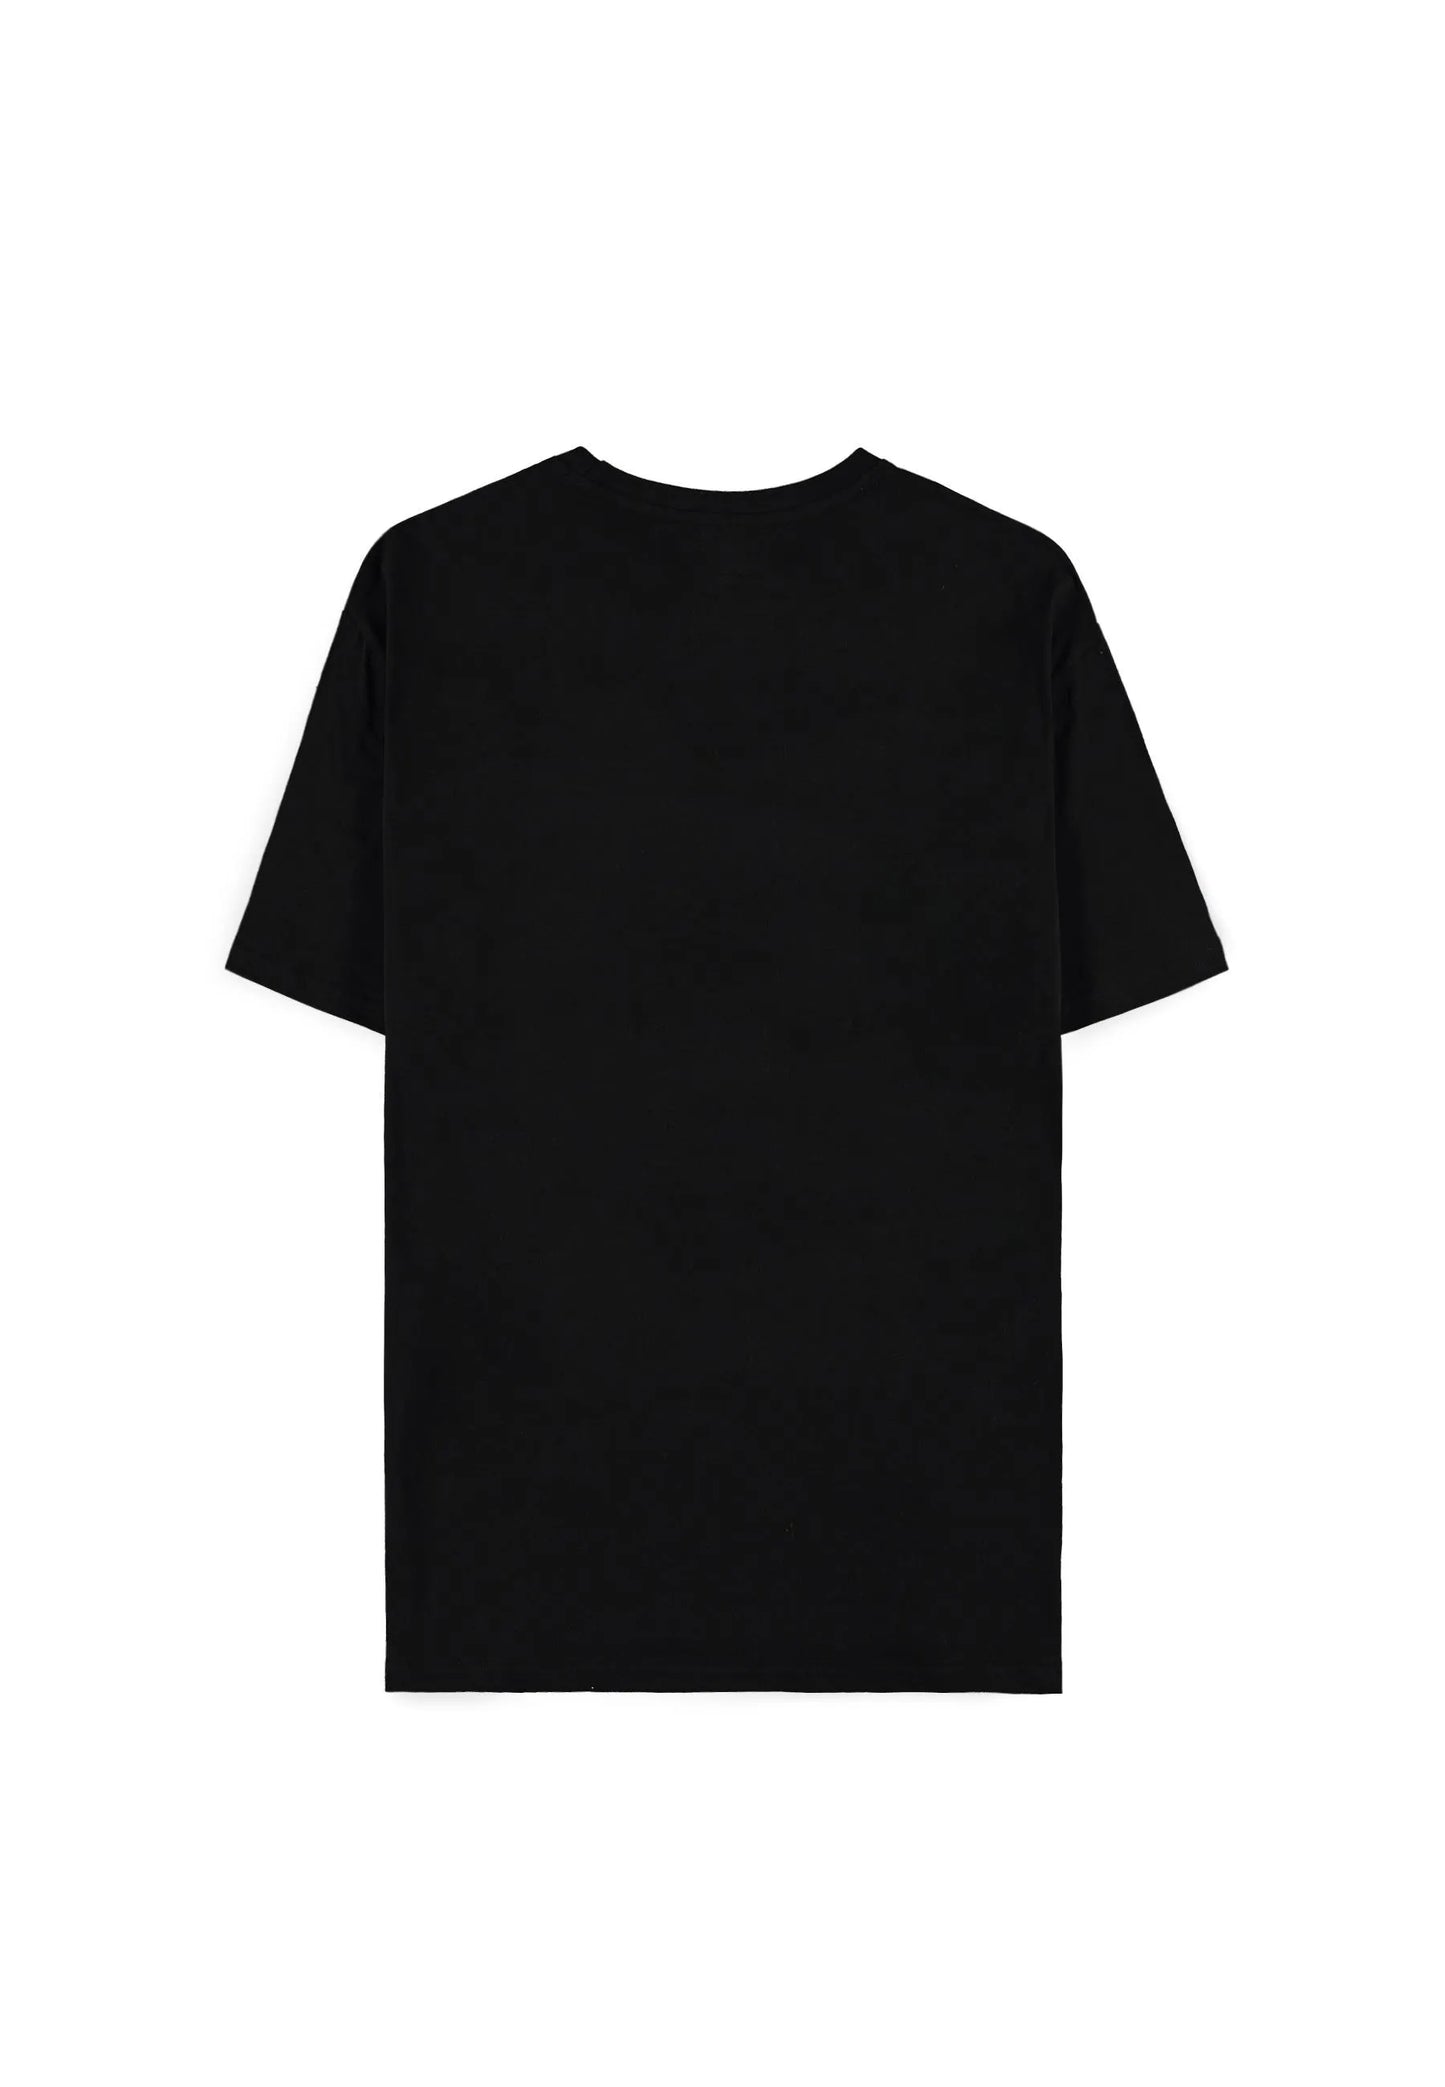 Naruto - Graffiti Square - Men's Short Sleeved T-shirt